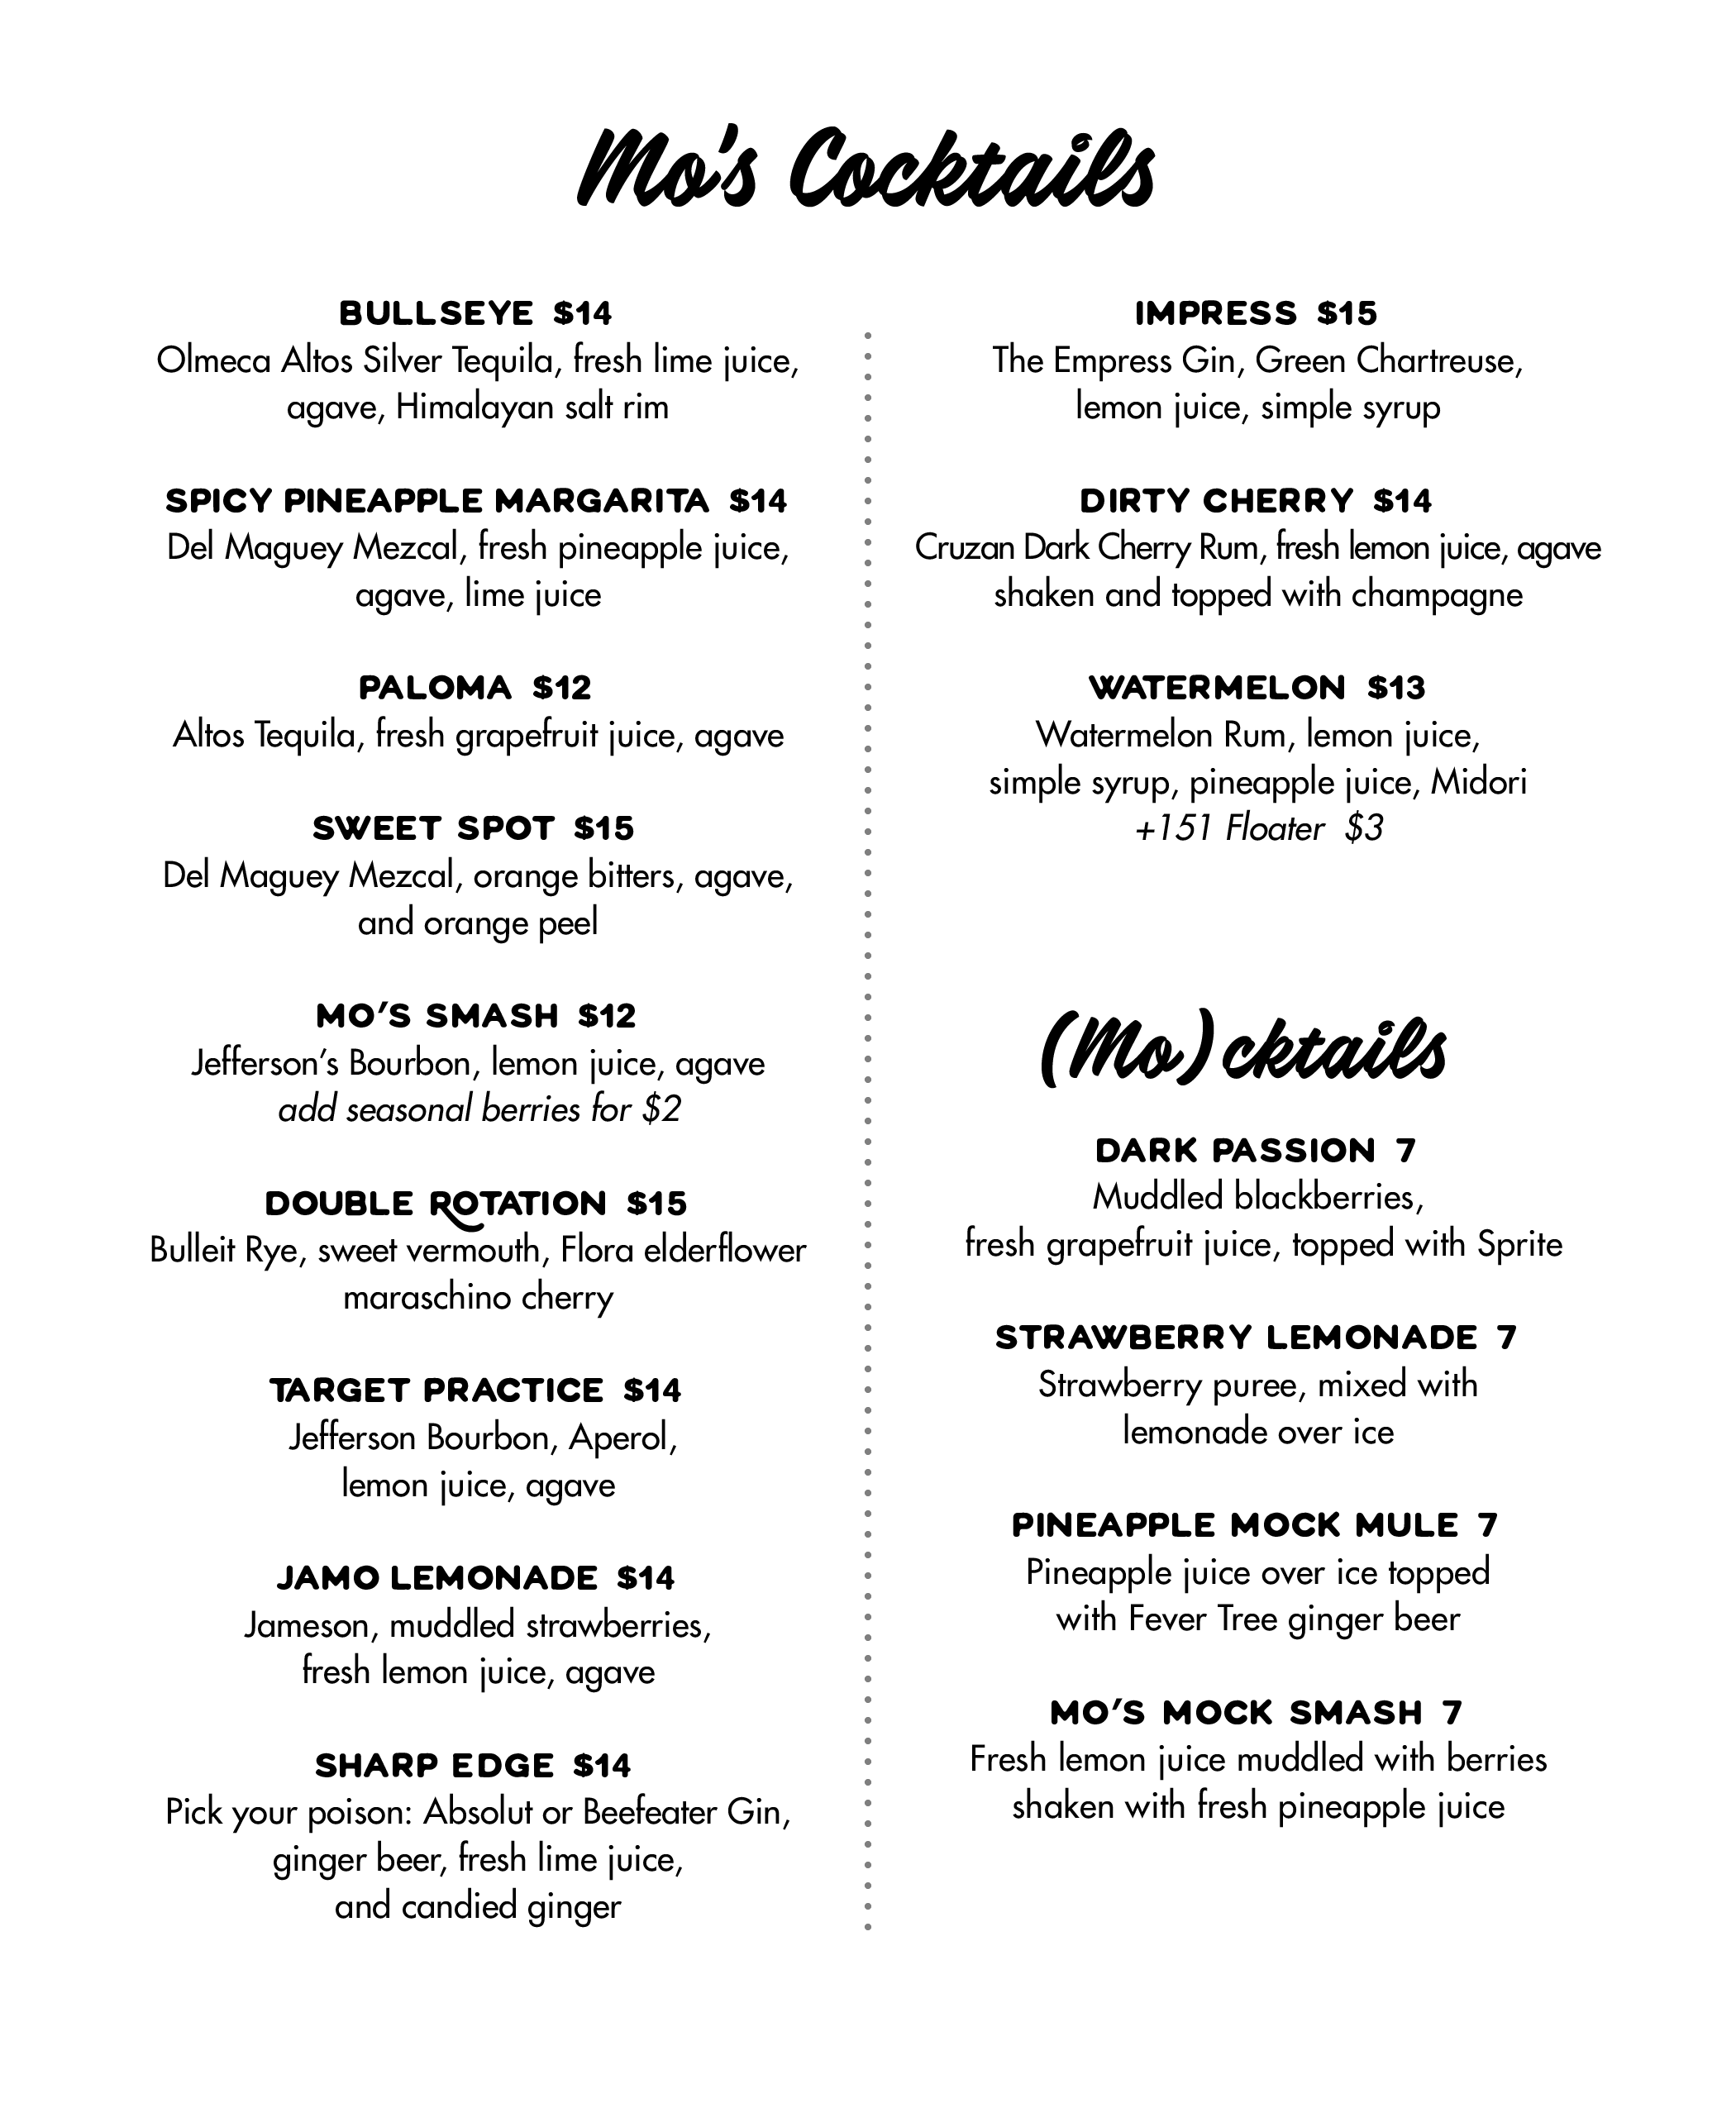 MHOA MenuWeb PAGE 7 Cocktails